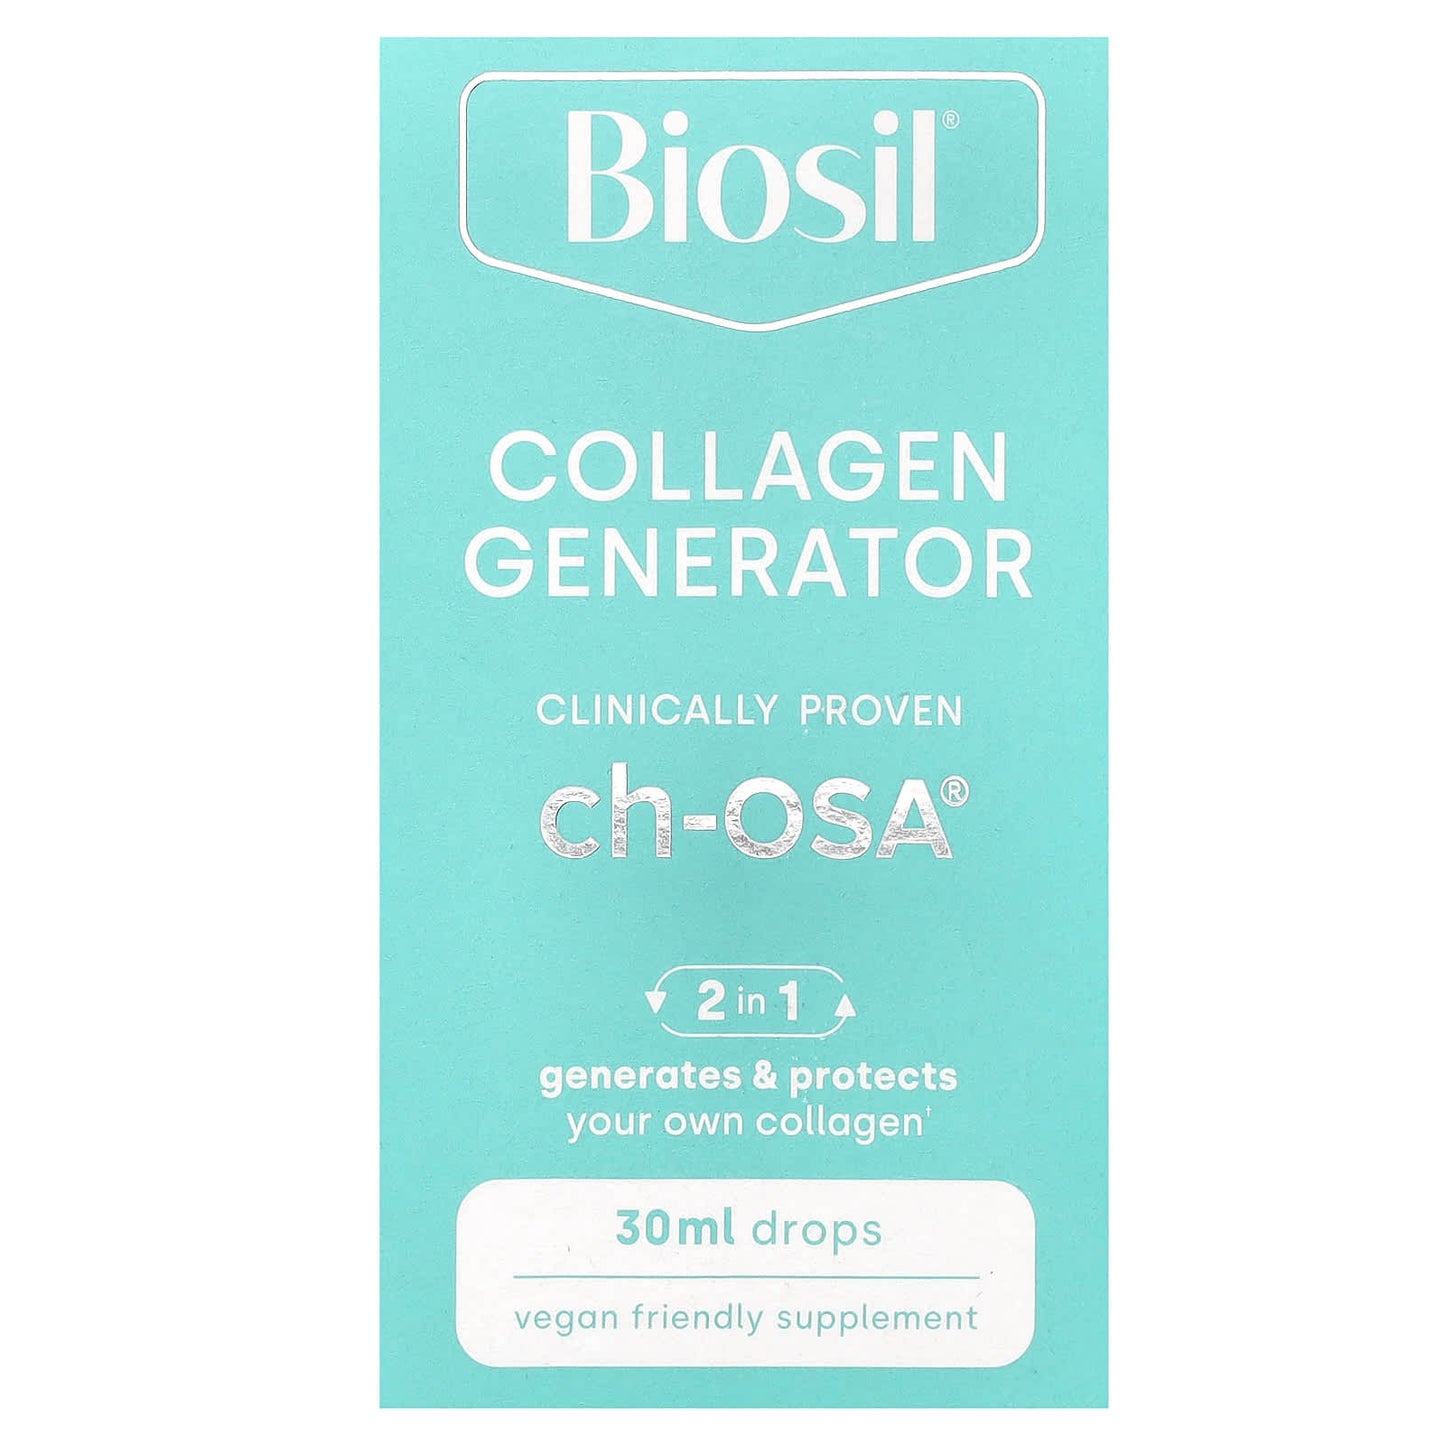 BioSil-Collagen Generator-30 ml drops